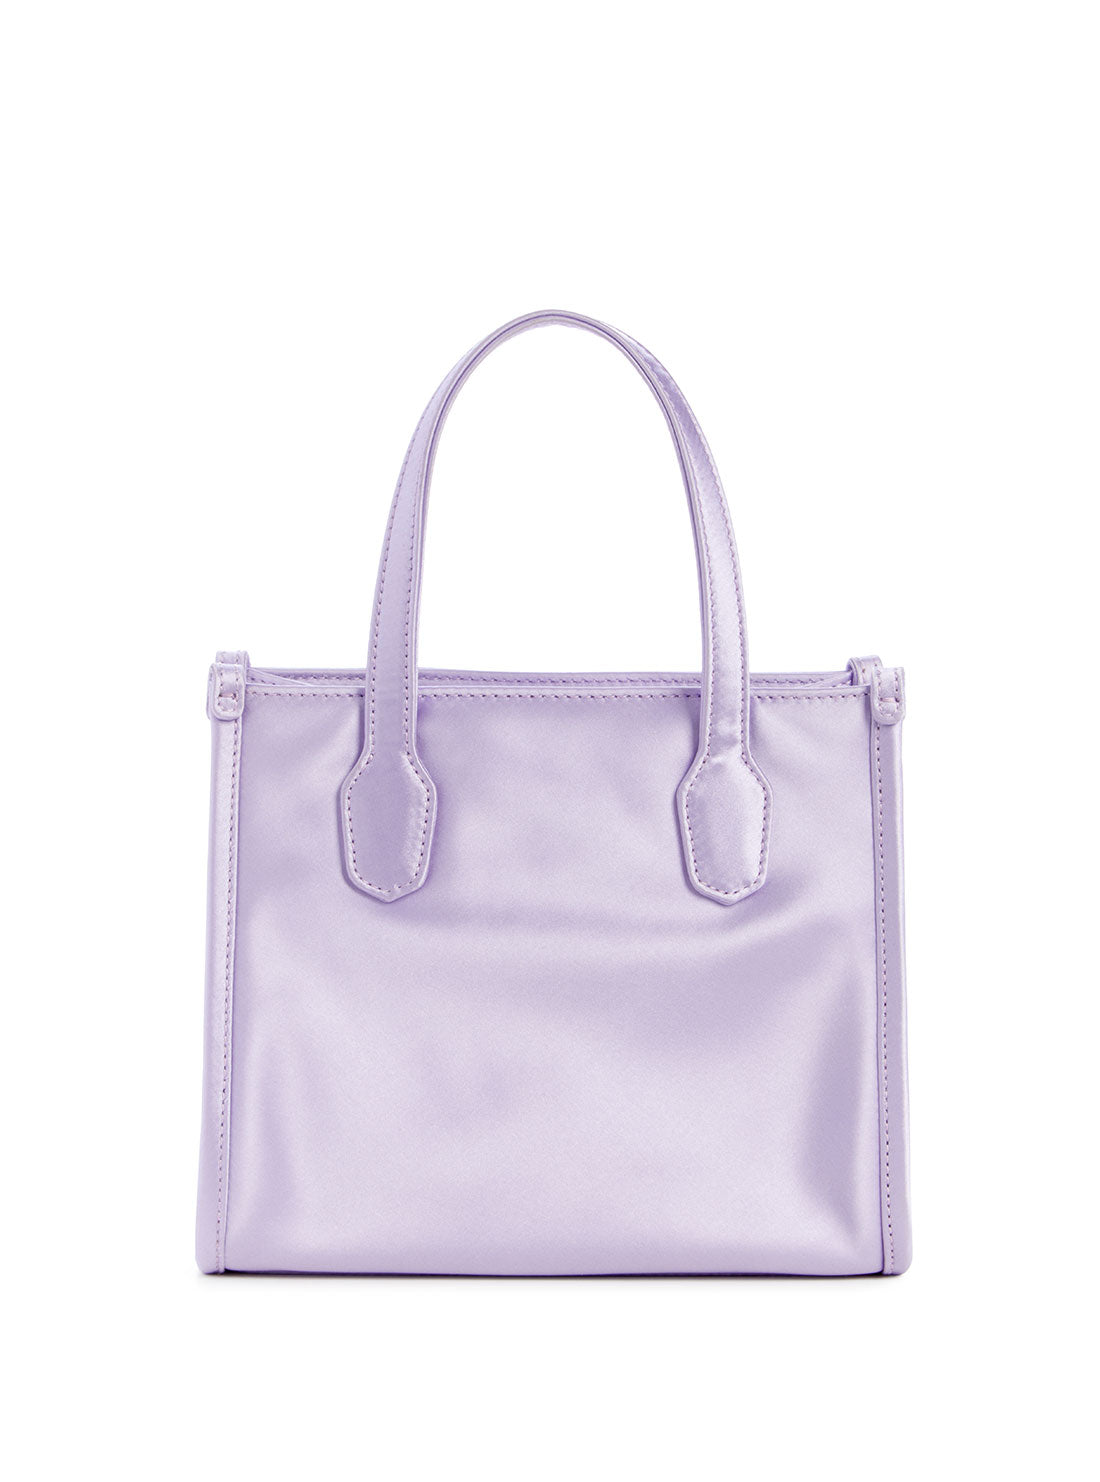 GUESS Purple Silvana Mini Tote Bag back view